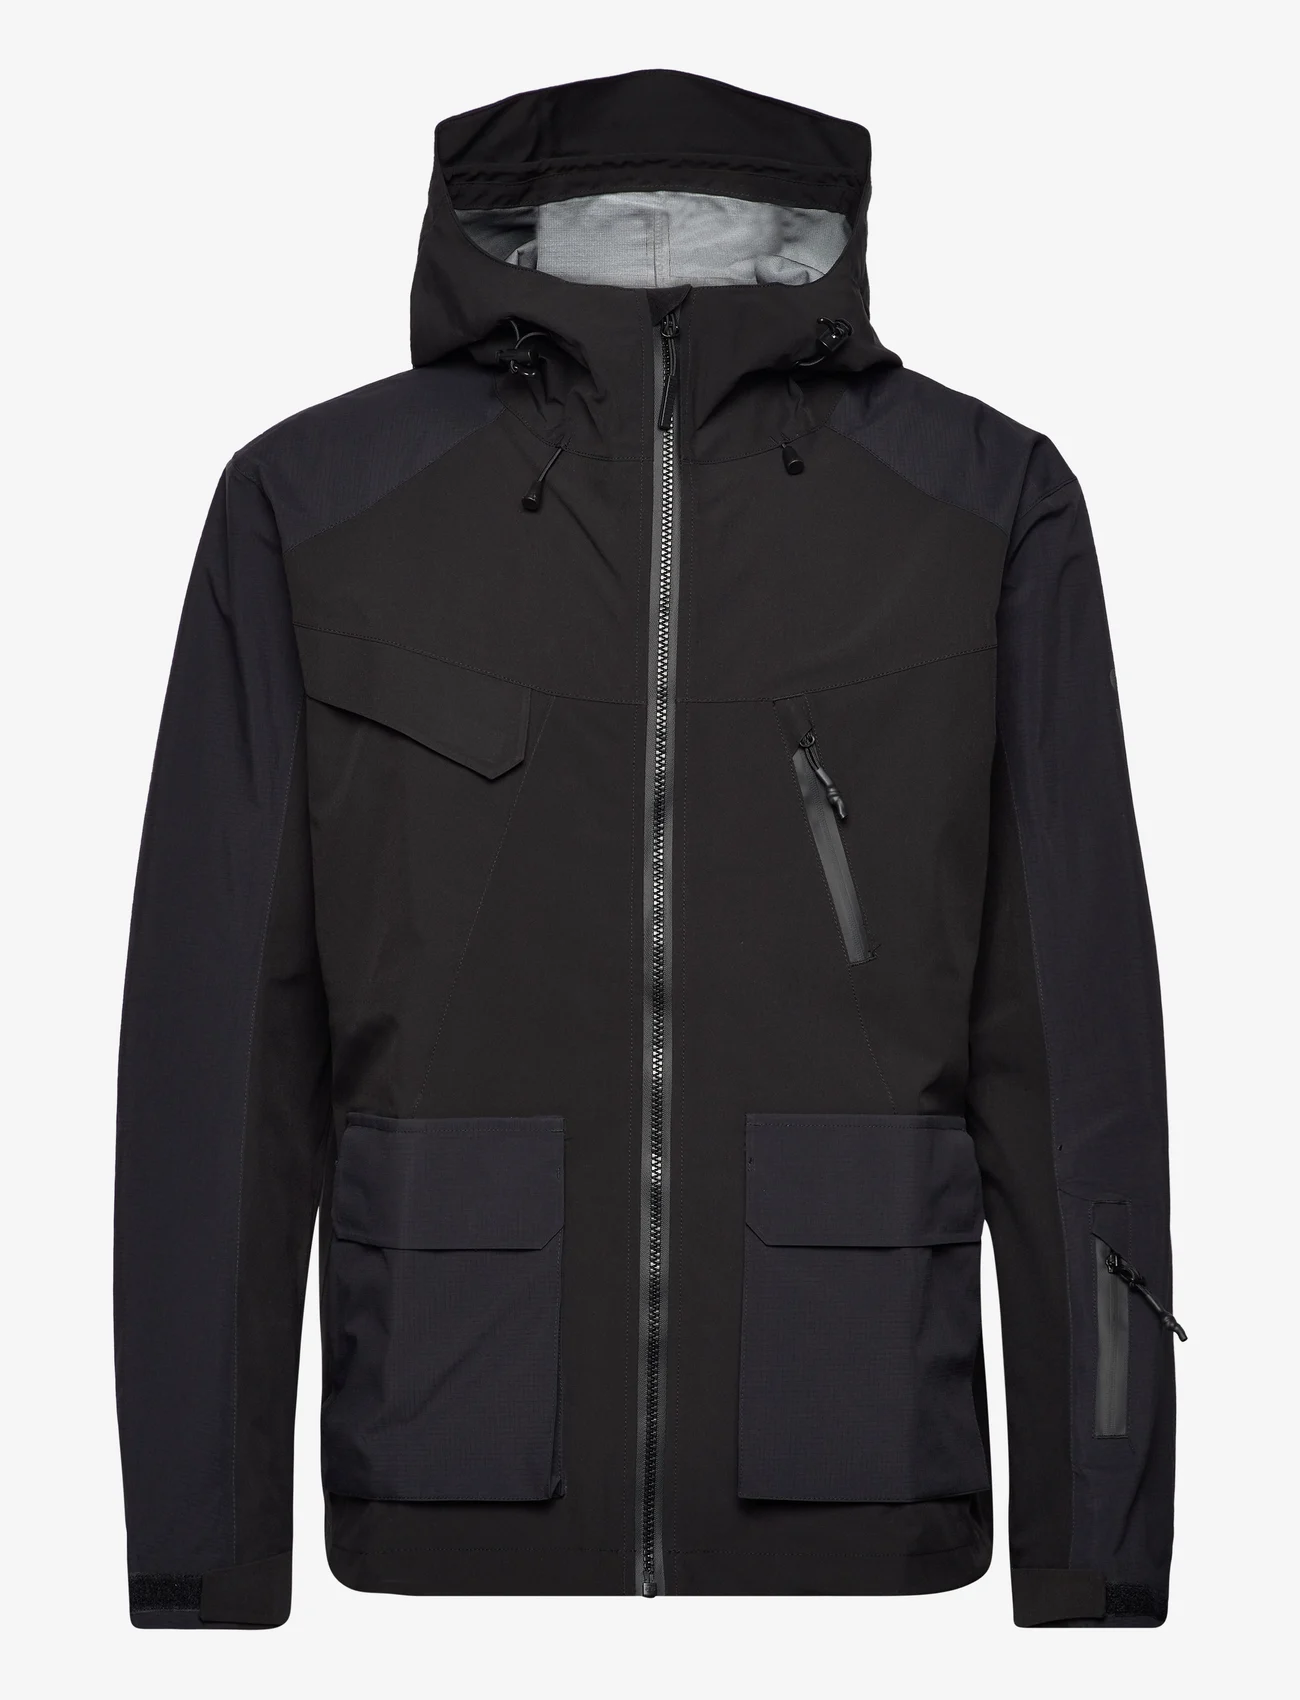 Woodbird - WBMizo Elka Shell Jacket - spring jackets - black - 0